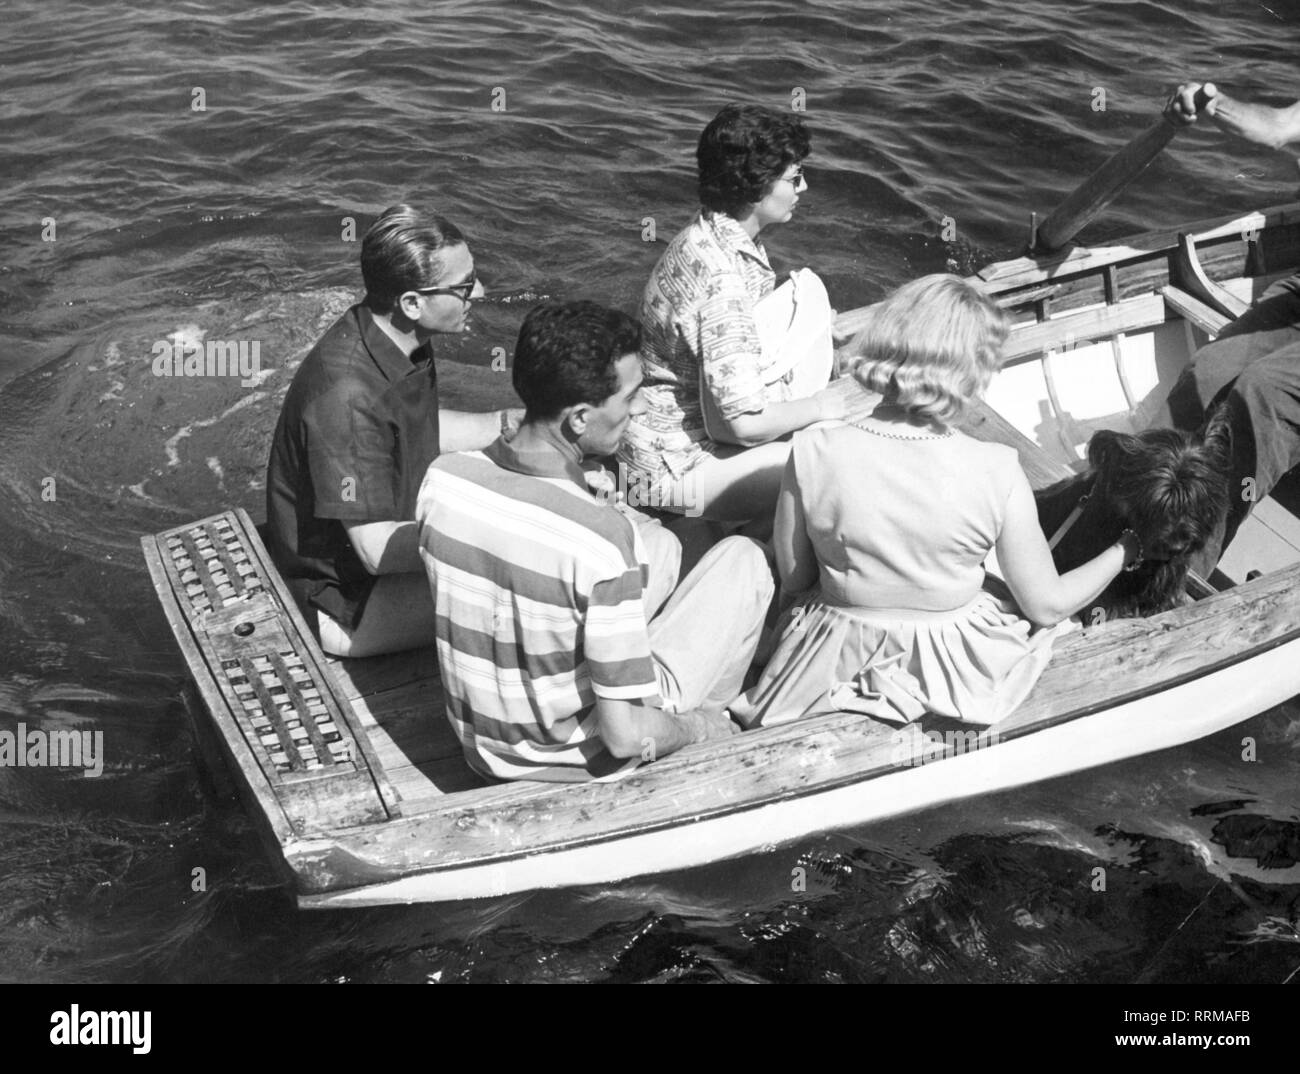 Mohammad Reza Pahlevi, 26.10.1919 - 27.7.1980, Shah de Irán 17.9.1941 - 31.3.1979, de longitud media, con su esposa Soraya en un bote de remo, Capri, 19.7.1957, Additional-Rights-Clearance-Info-Not-Available Foto de stock